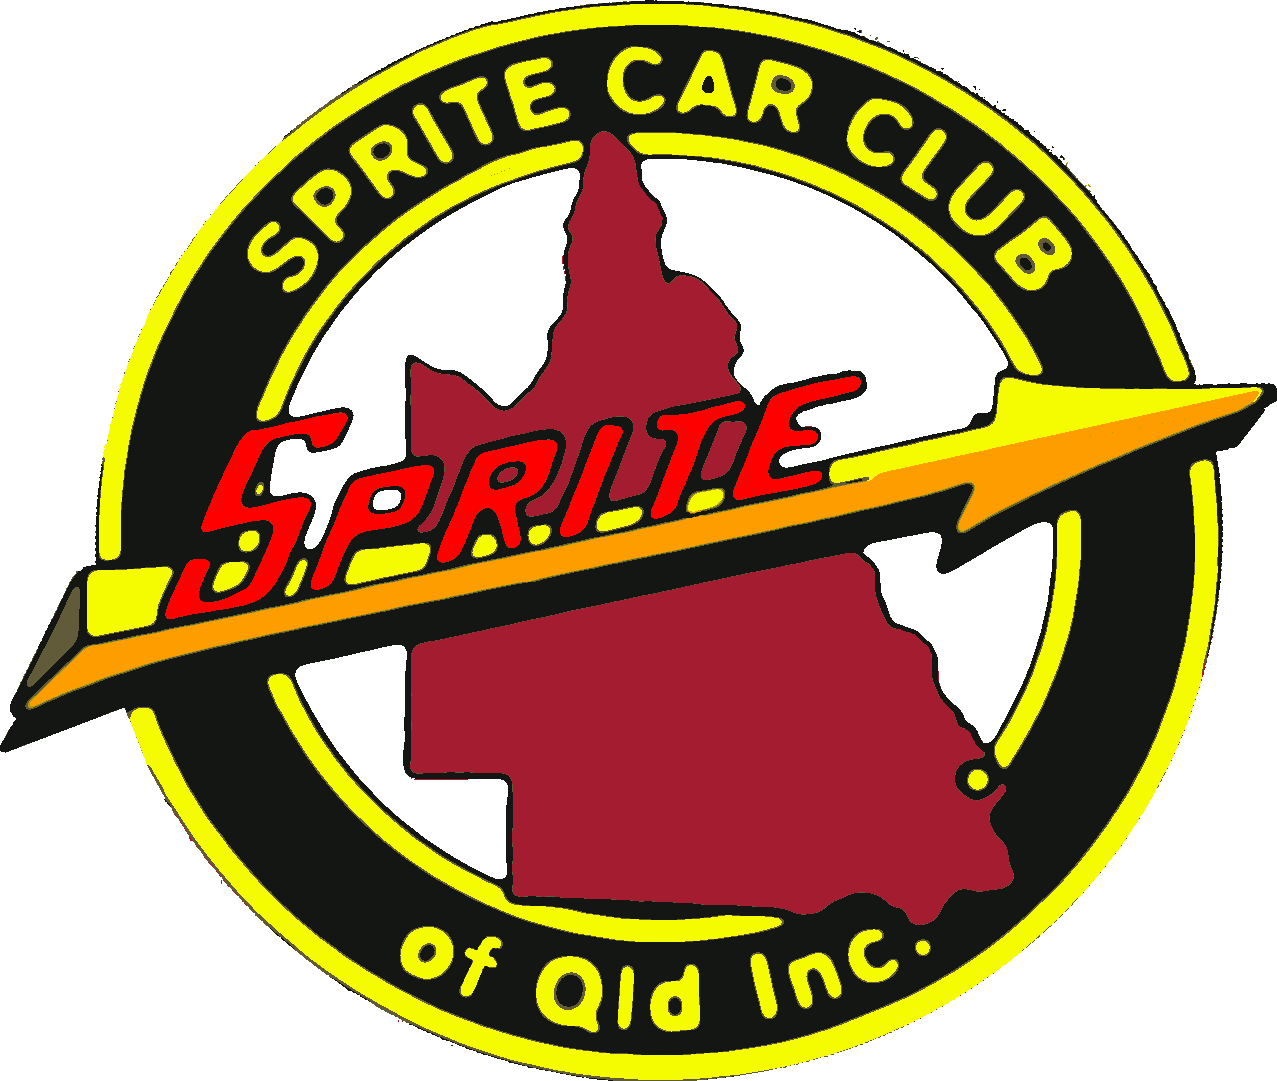 The Sprite Car Club of Qld 